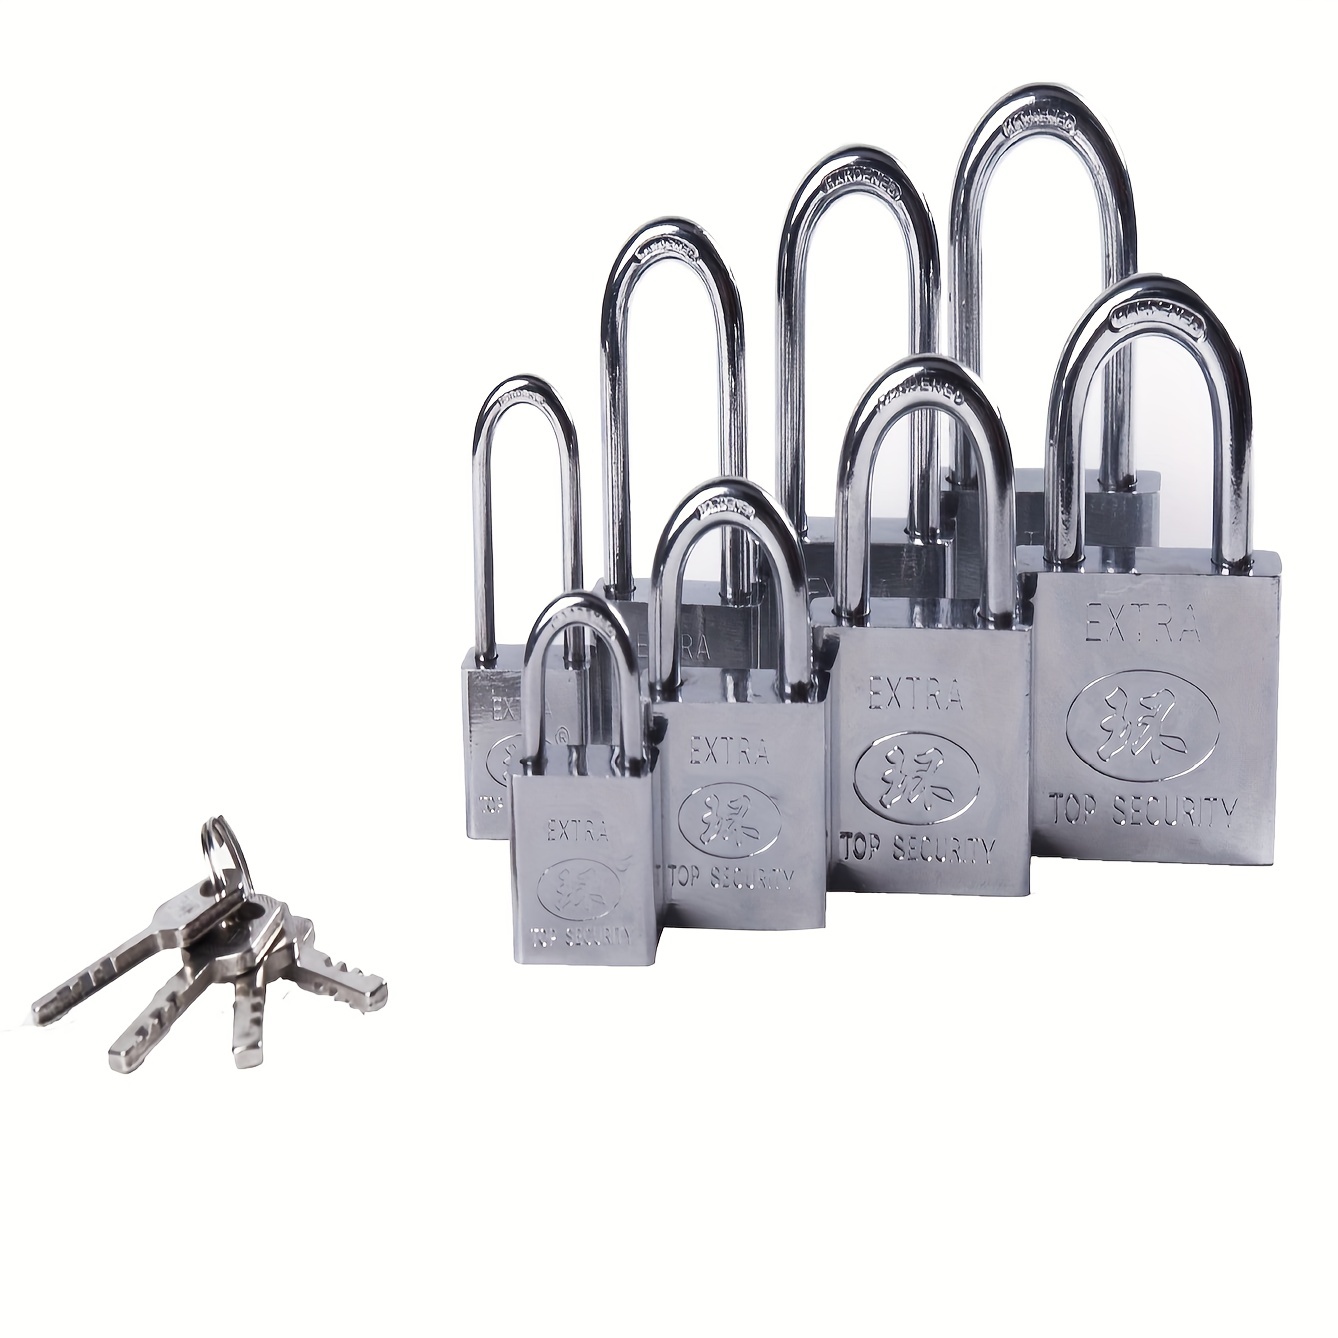 CM - Top Security Padlock 60mm - Each - Cabinet Locks Canada